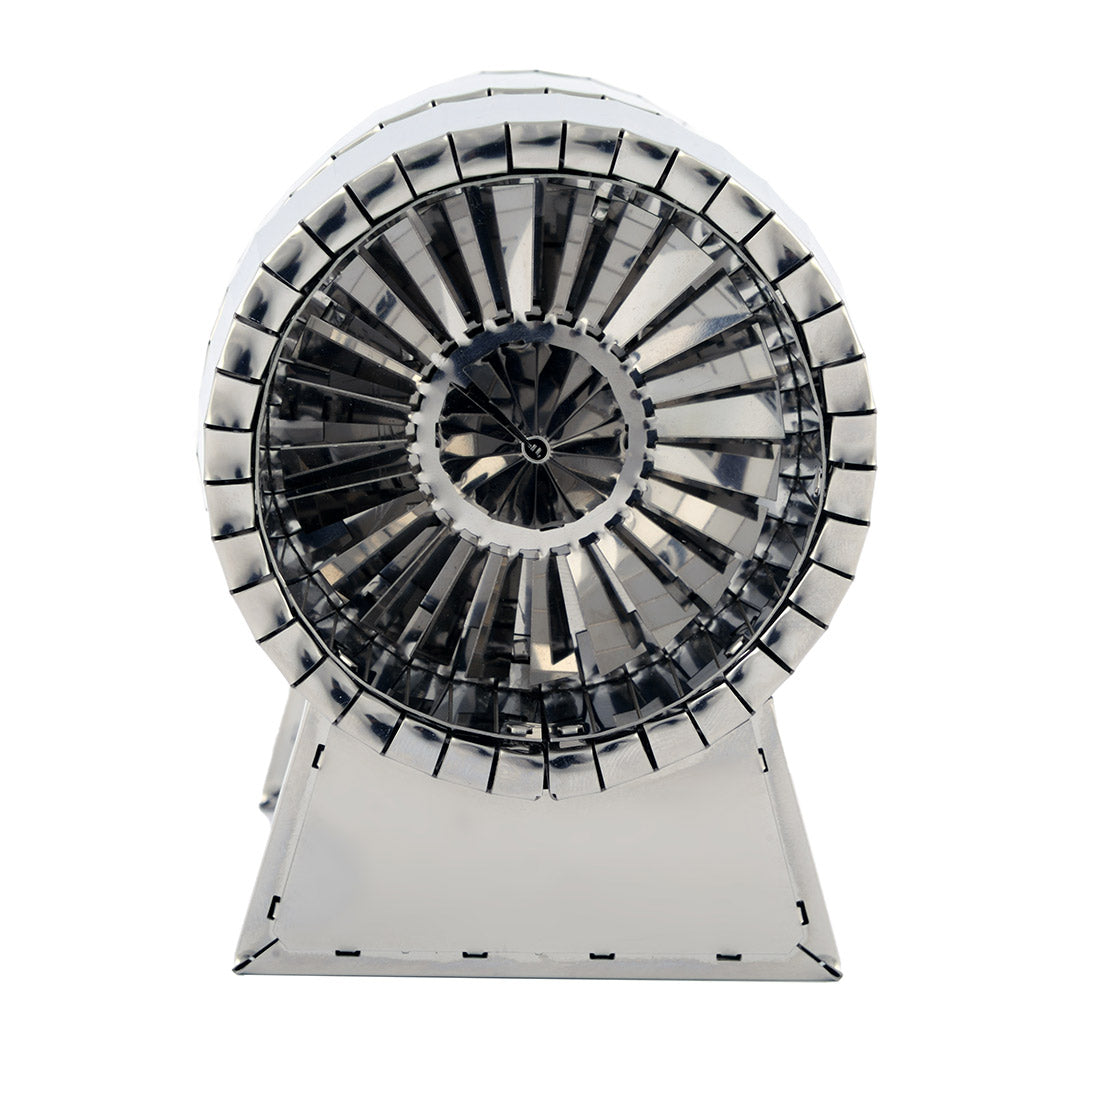 57pcs 3D Mechanical Rotating Turbine Jet Engine Model Kit -Air Force